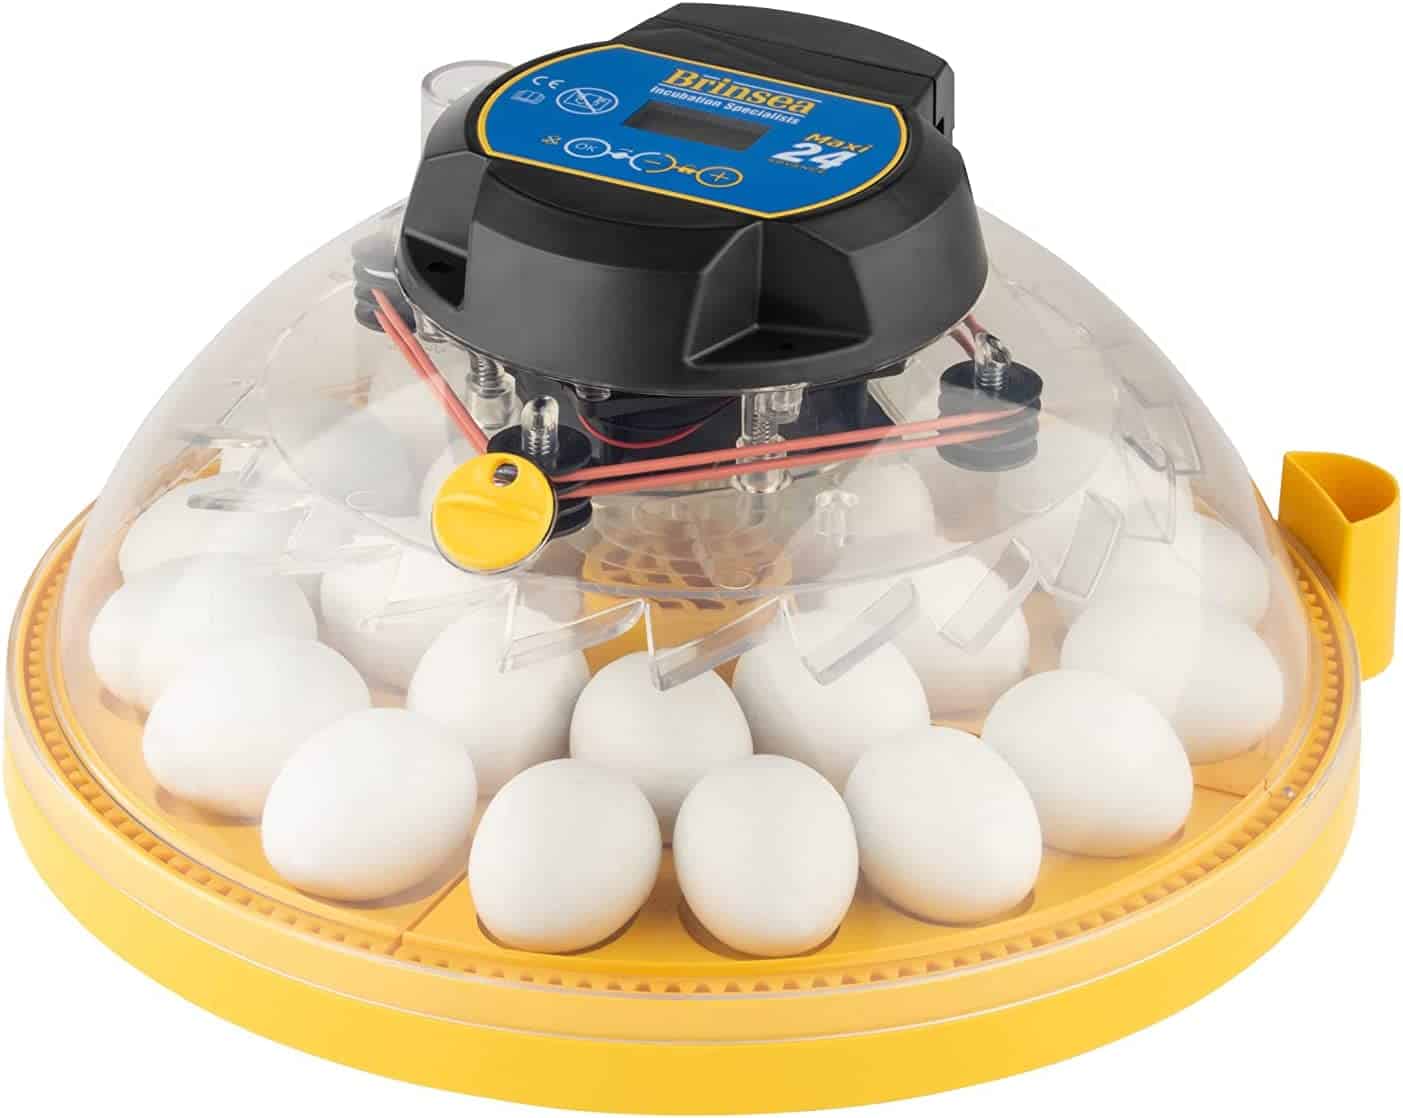 Brinsea Products 24-Egg Chicken Incubator